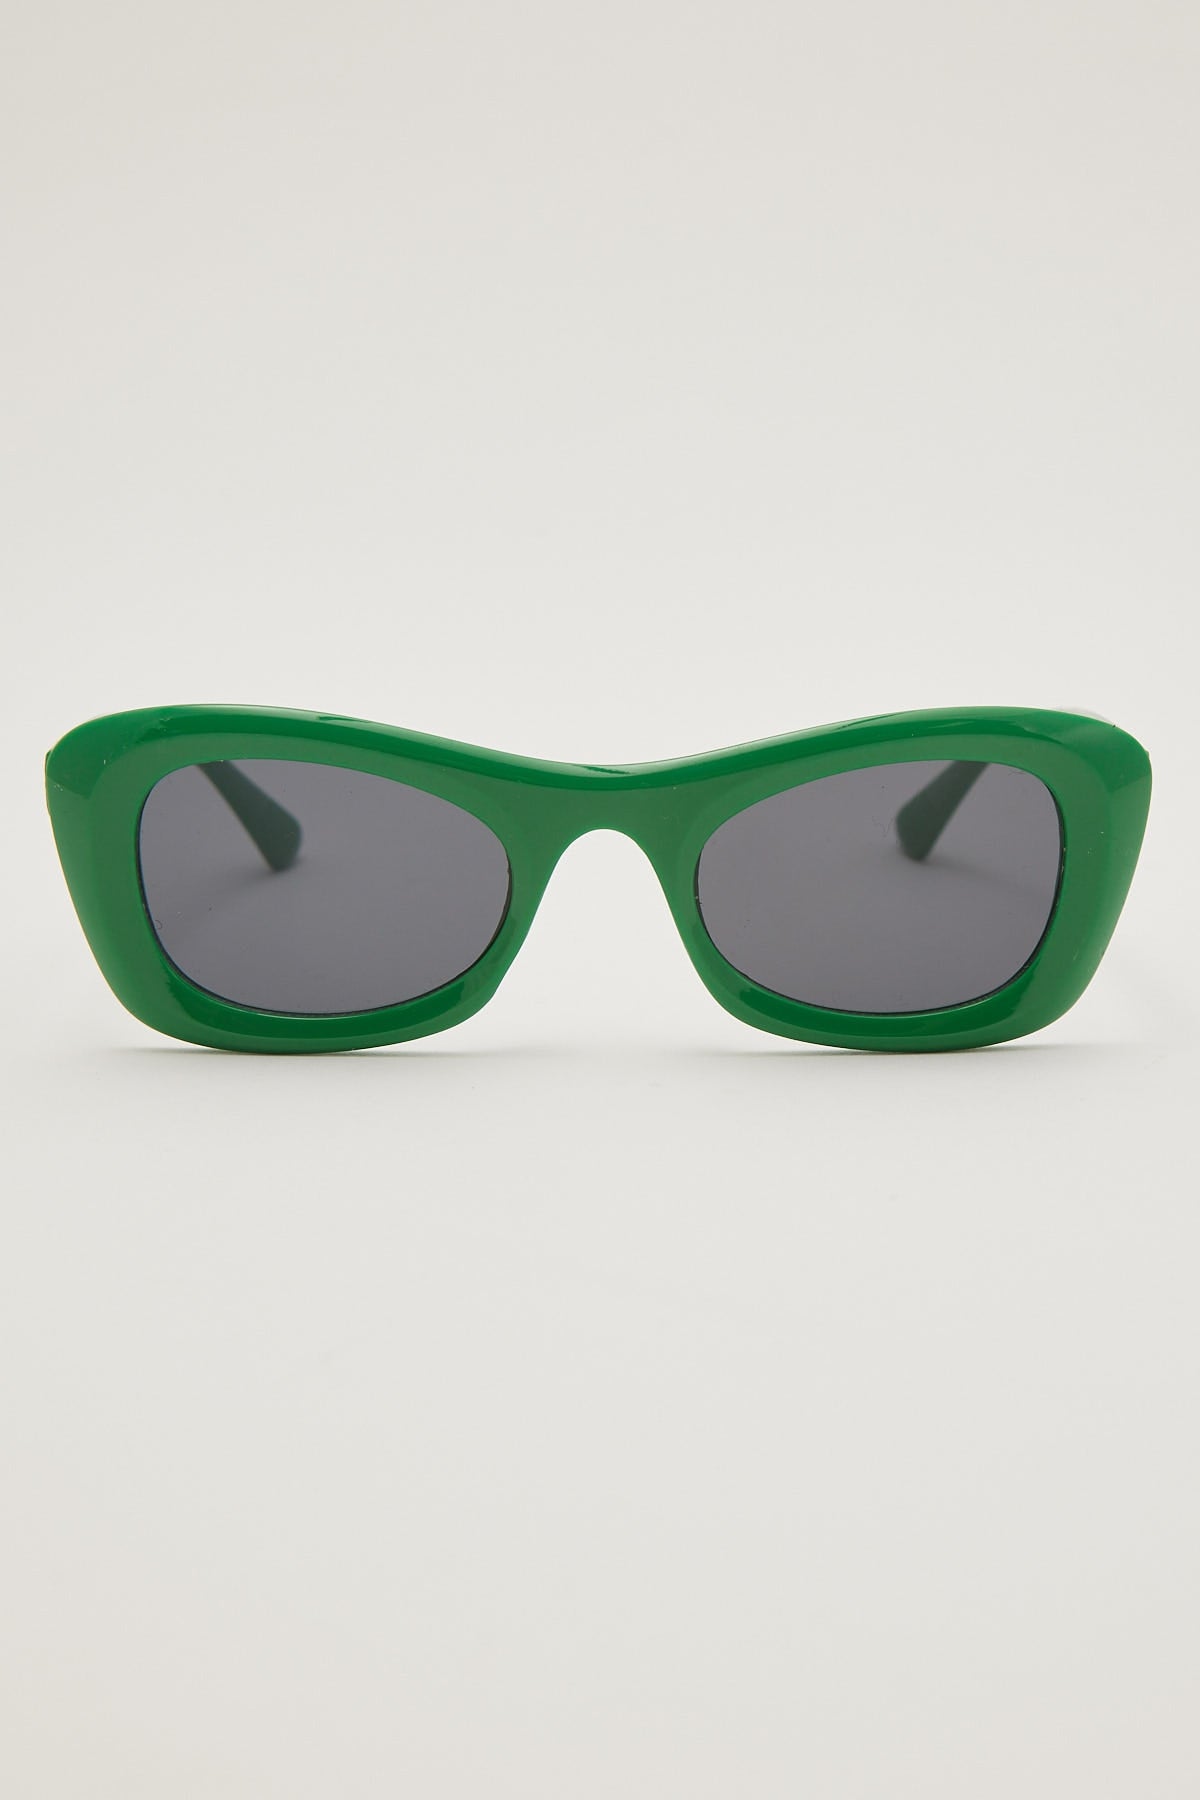 Angels Whisper Elmira Sunglasses Green